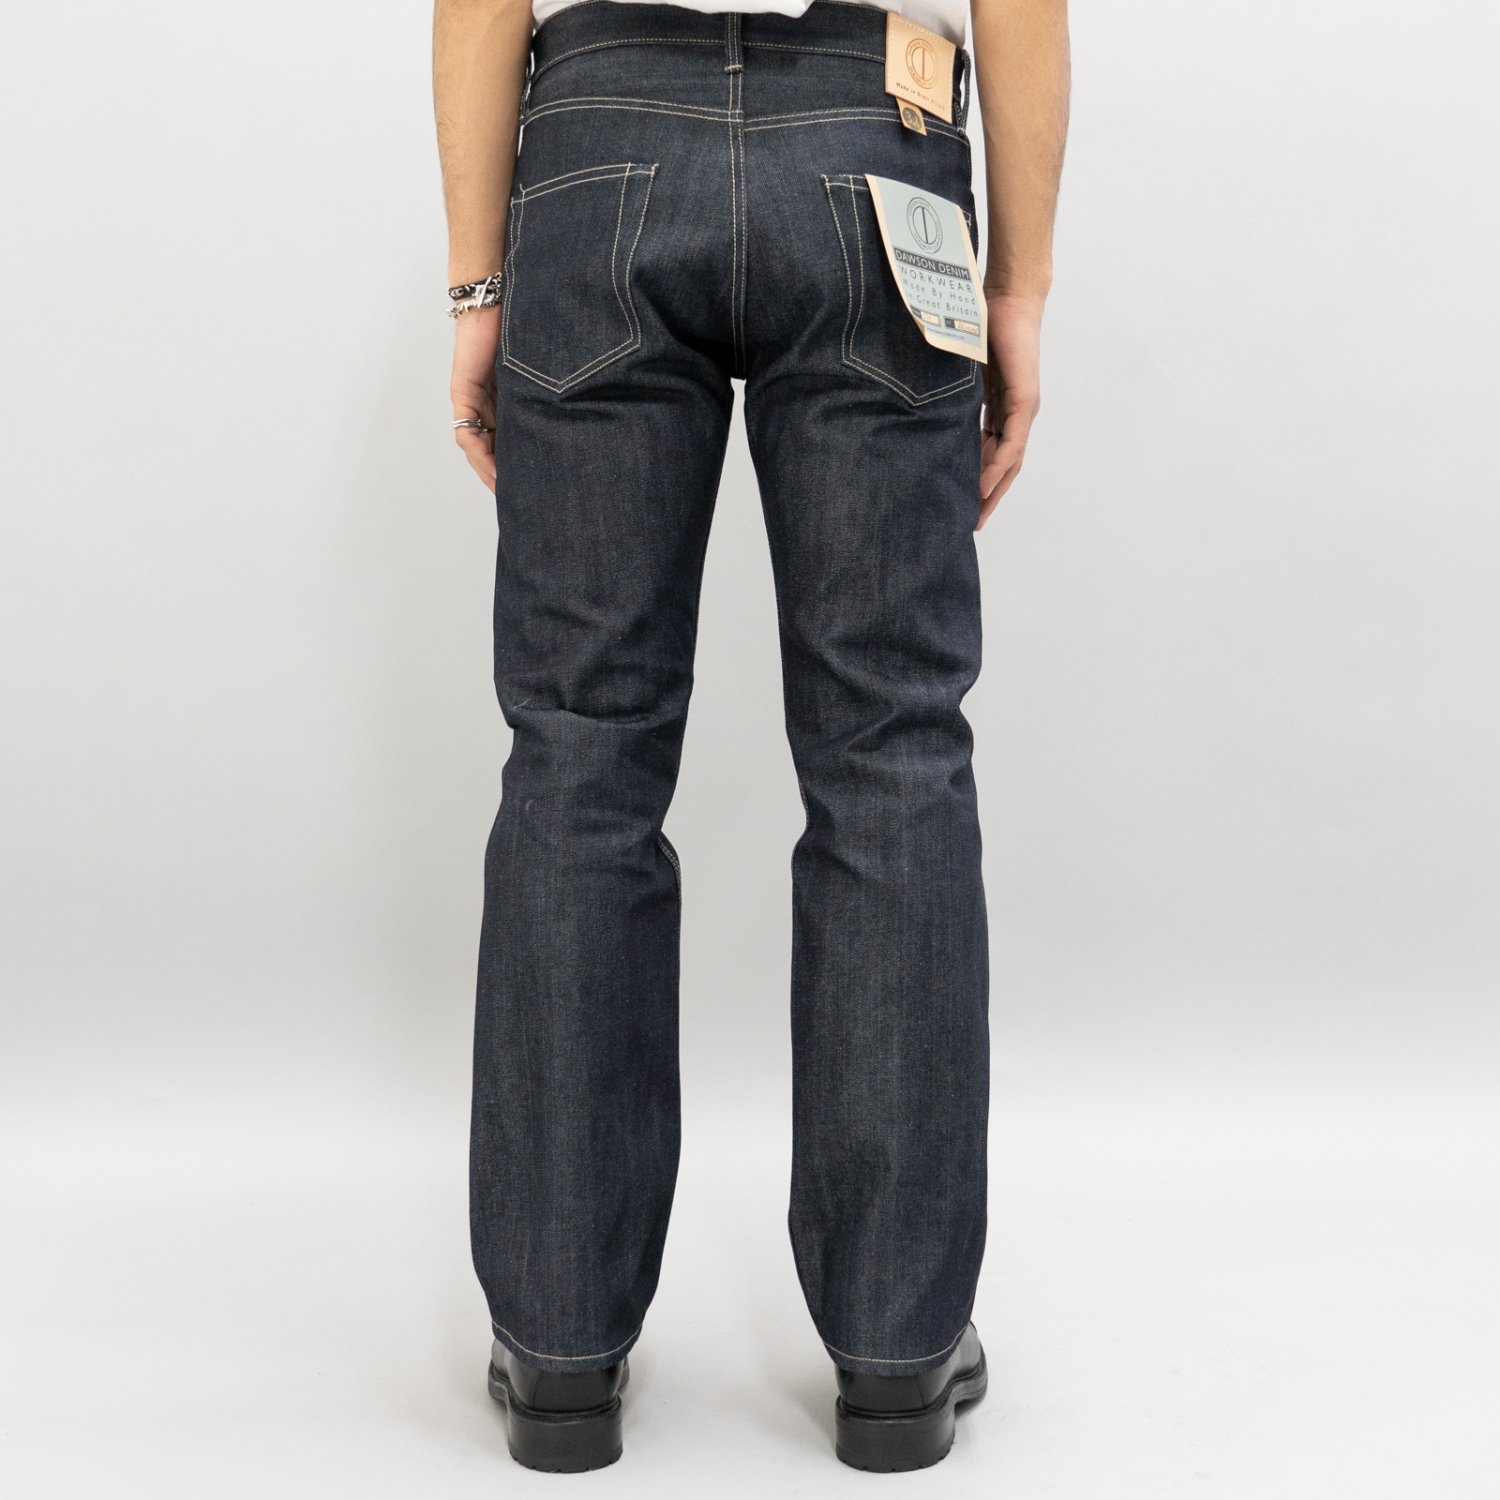 DAWSON DENIM * Regular Fit Jeans 14.25oz Selvedge Pure Indigo